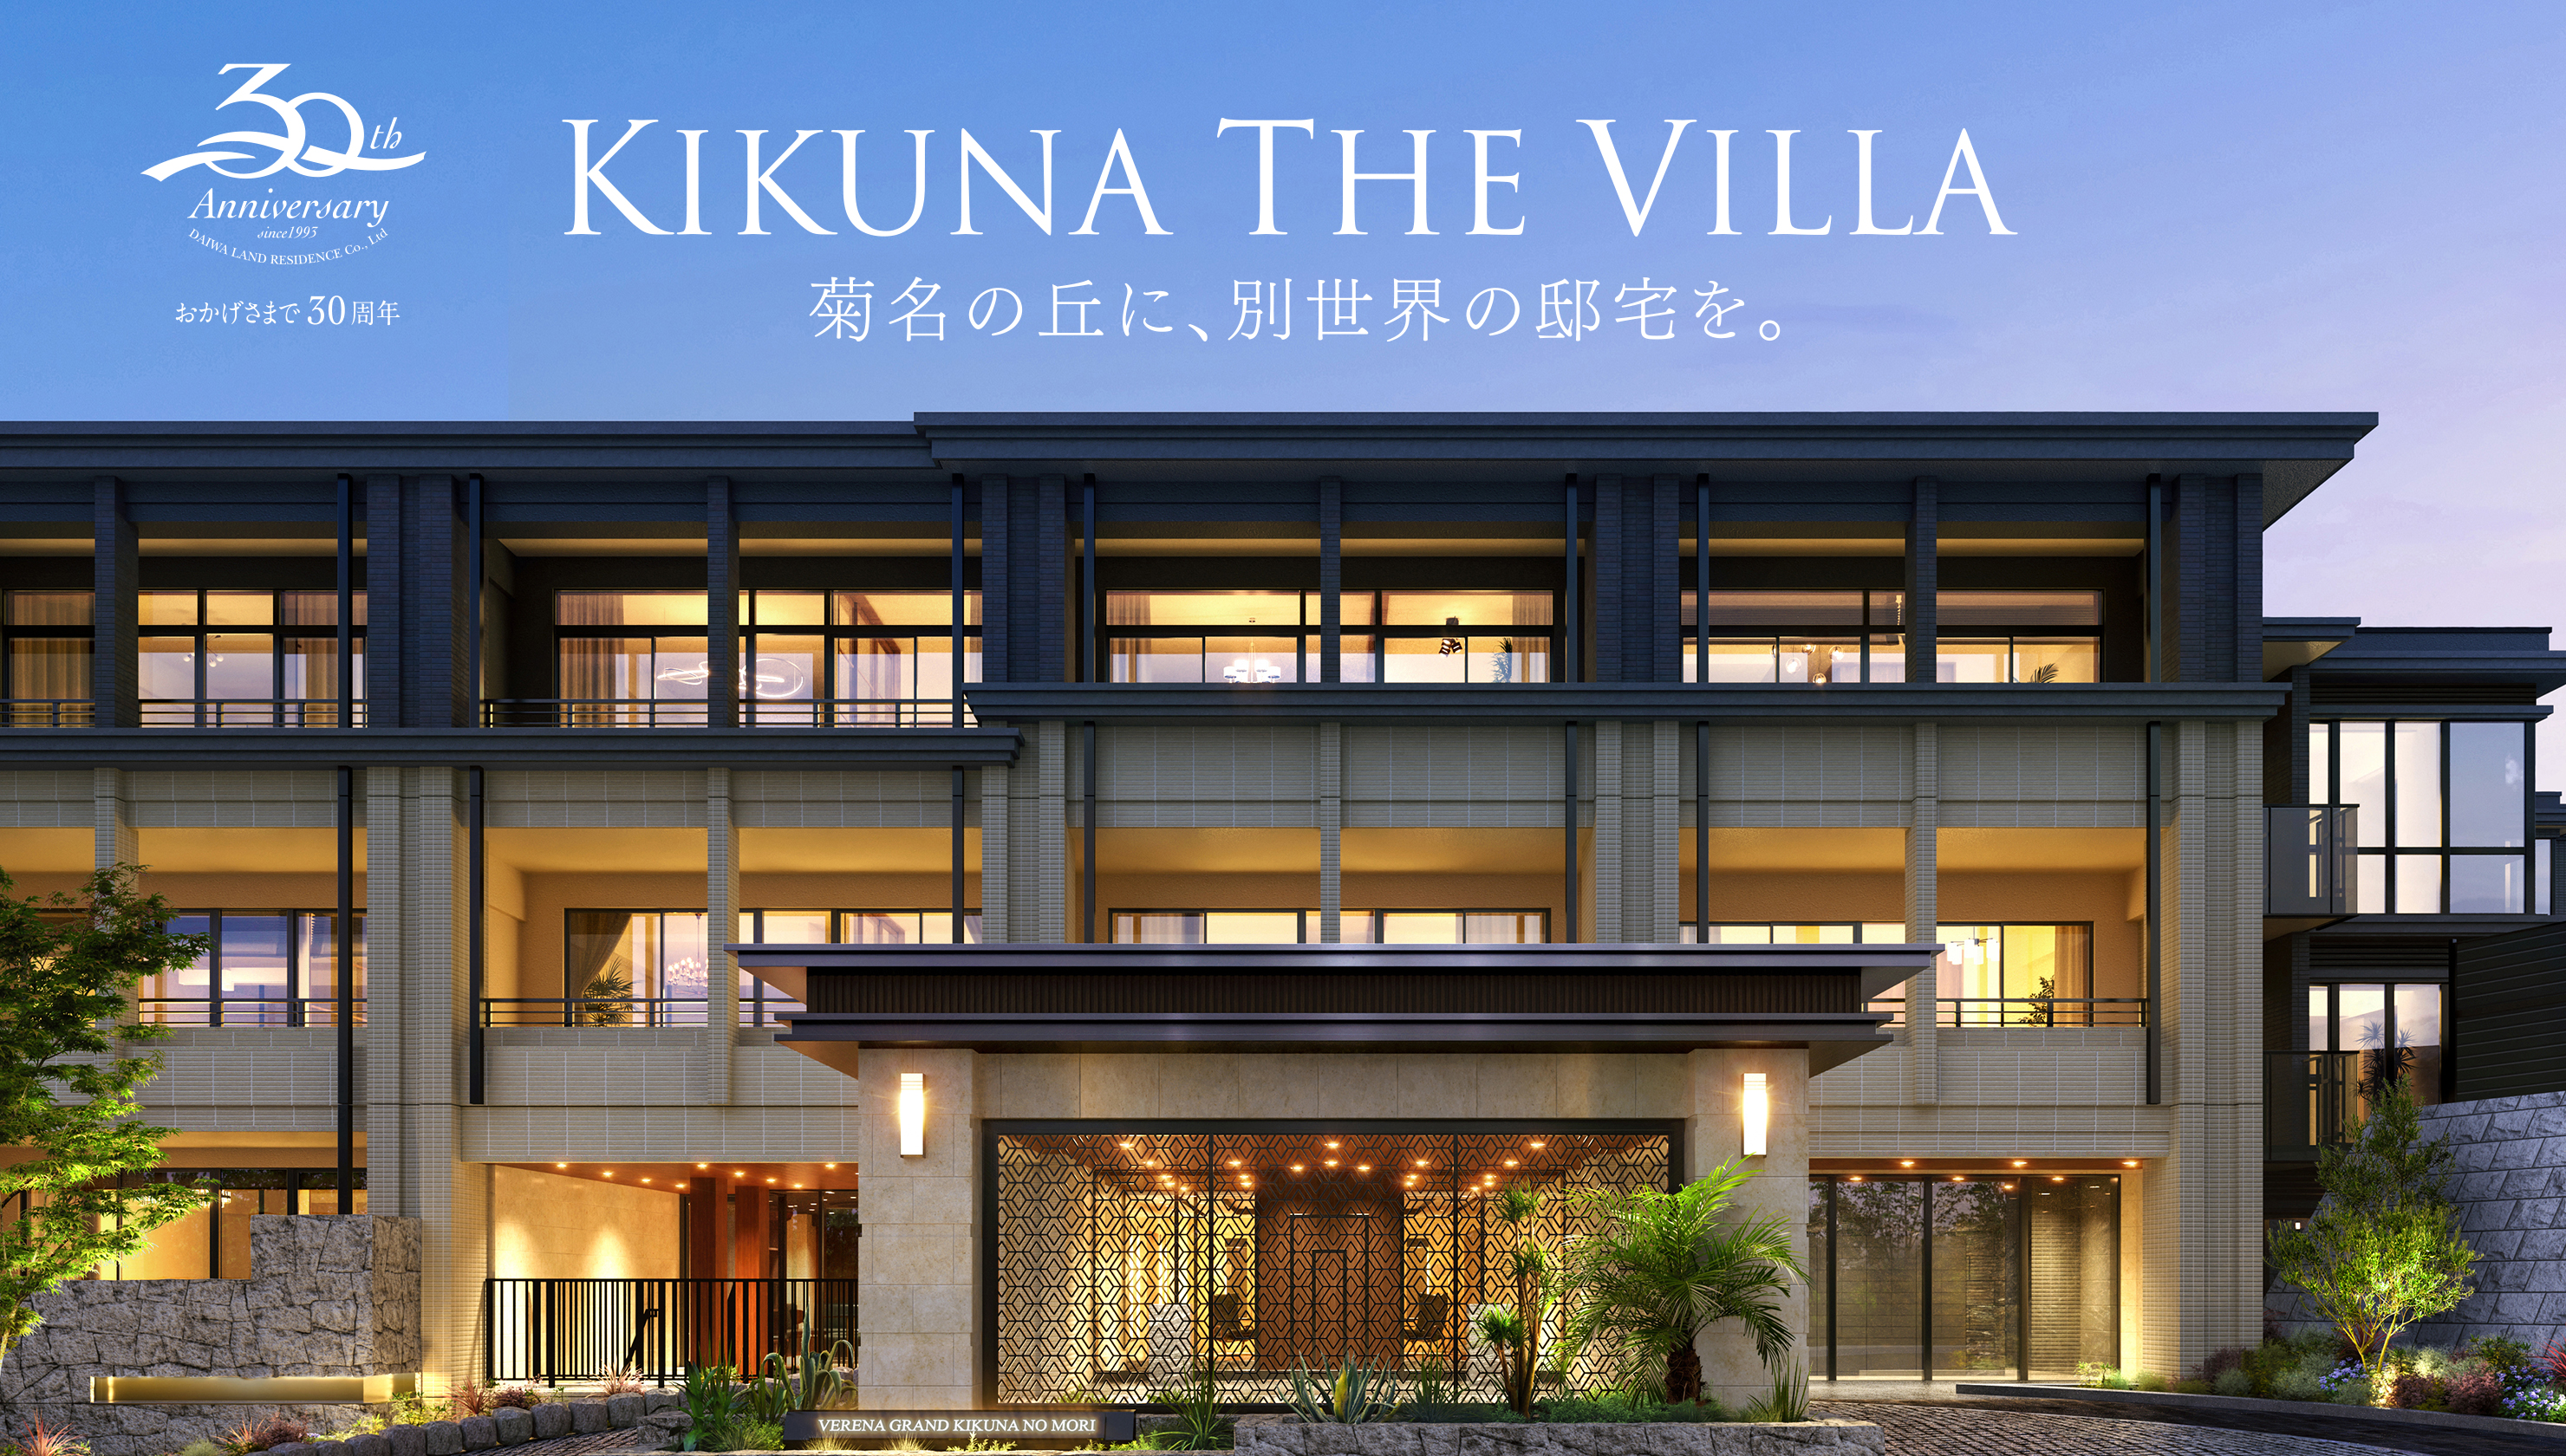 KIKUNA THE VILLA 菊名の丘に、別世界の邸宅を。